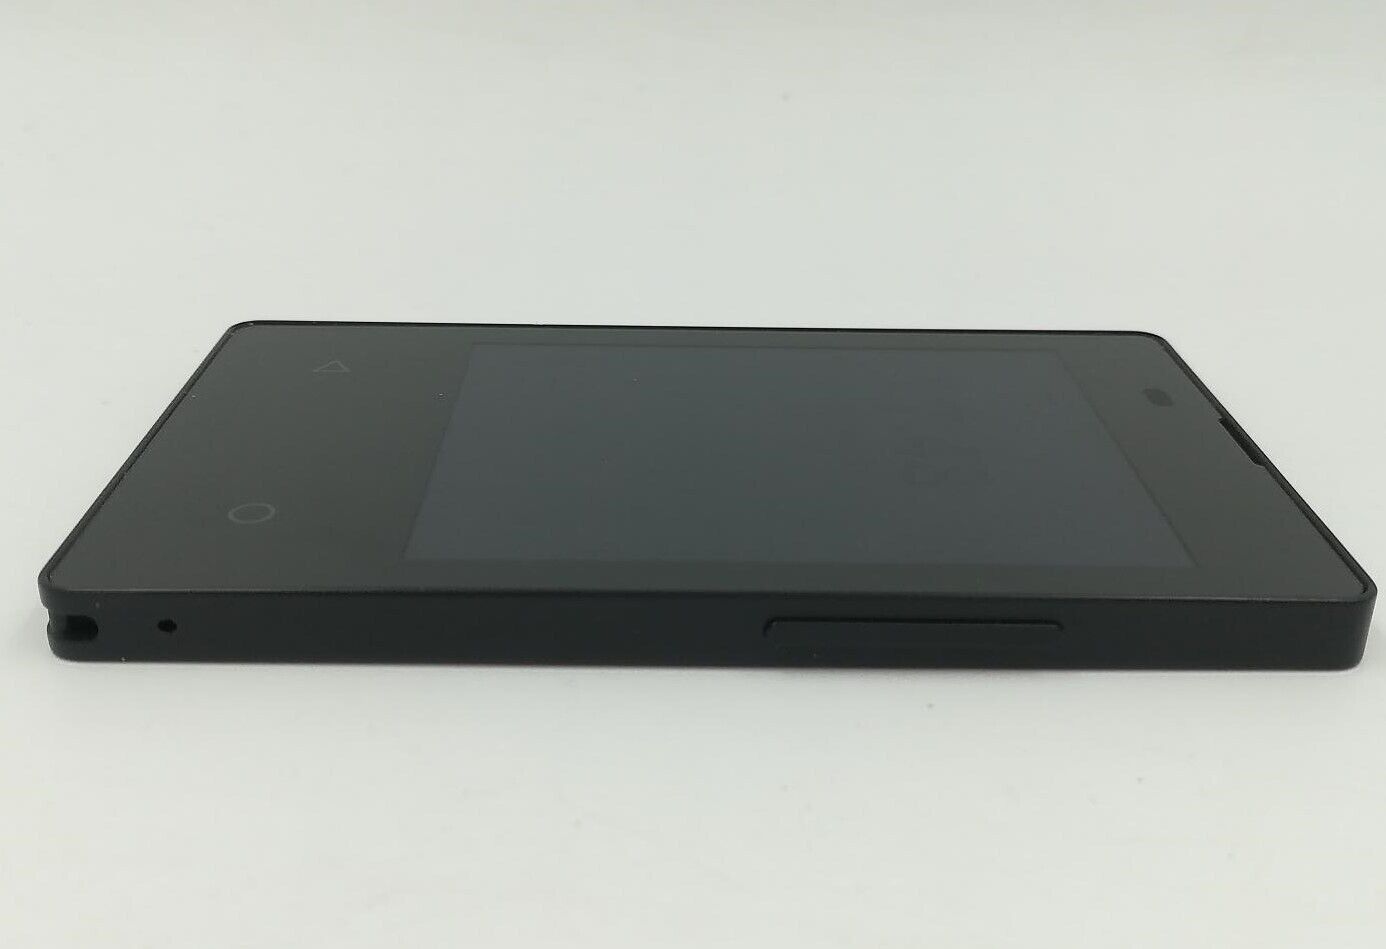 KYOCERA KY-01L Ink Black Card Size COMPACT PHONE DIGITAL PAPER UNLOCKED 47g